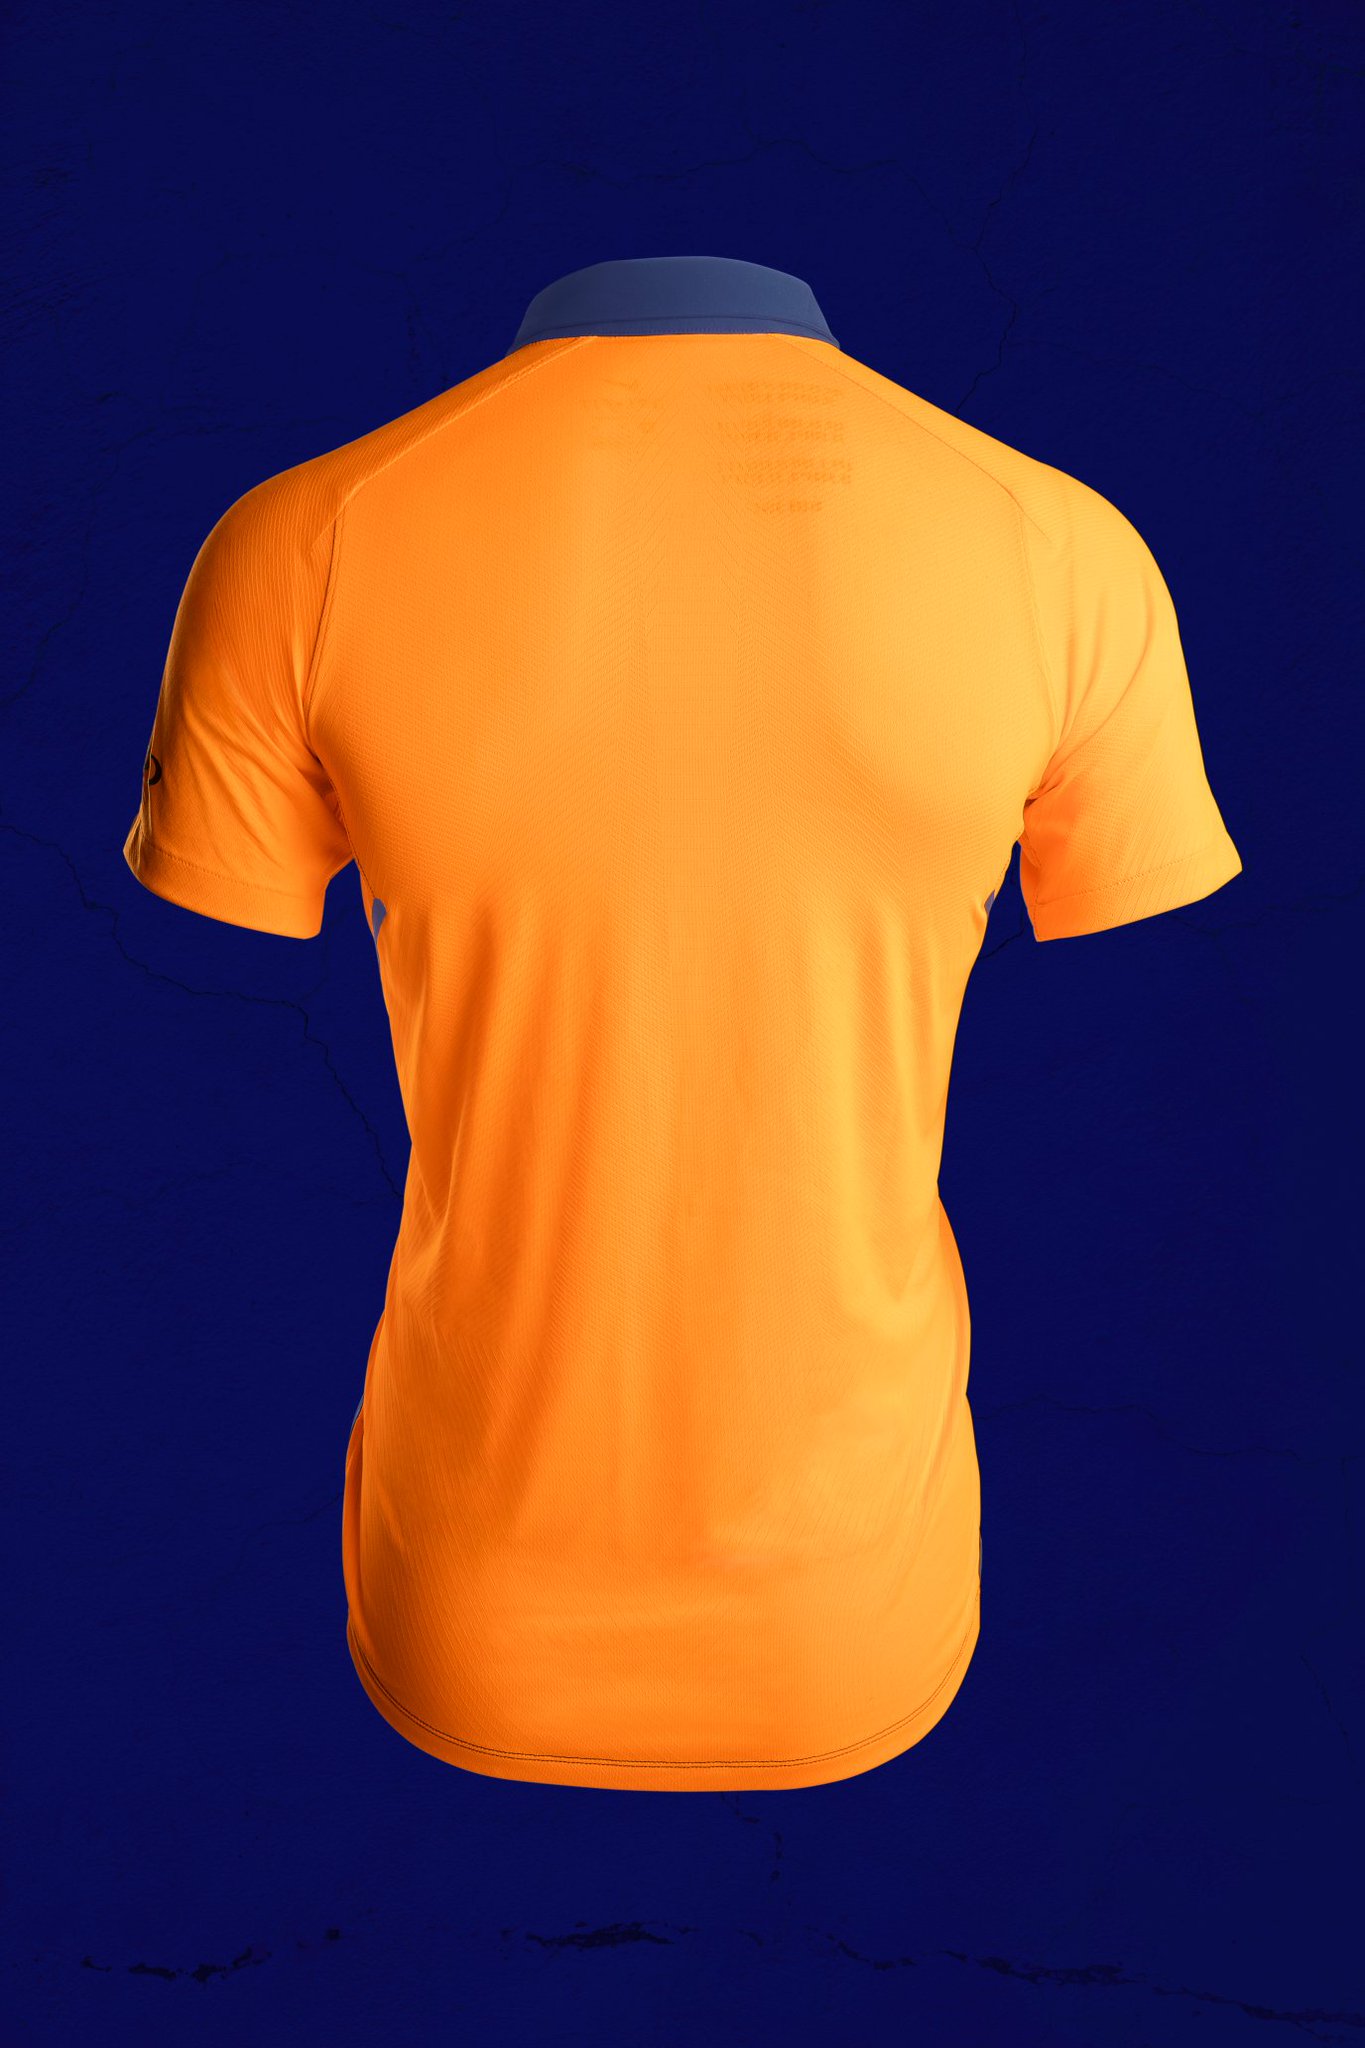 bcci orange jersey